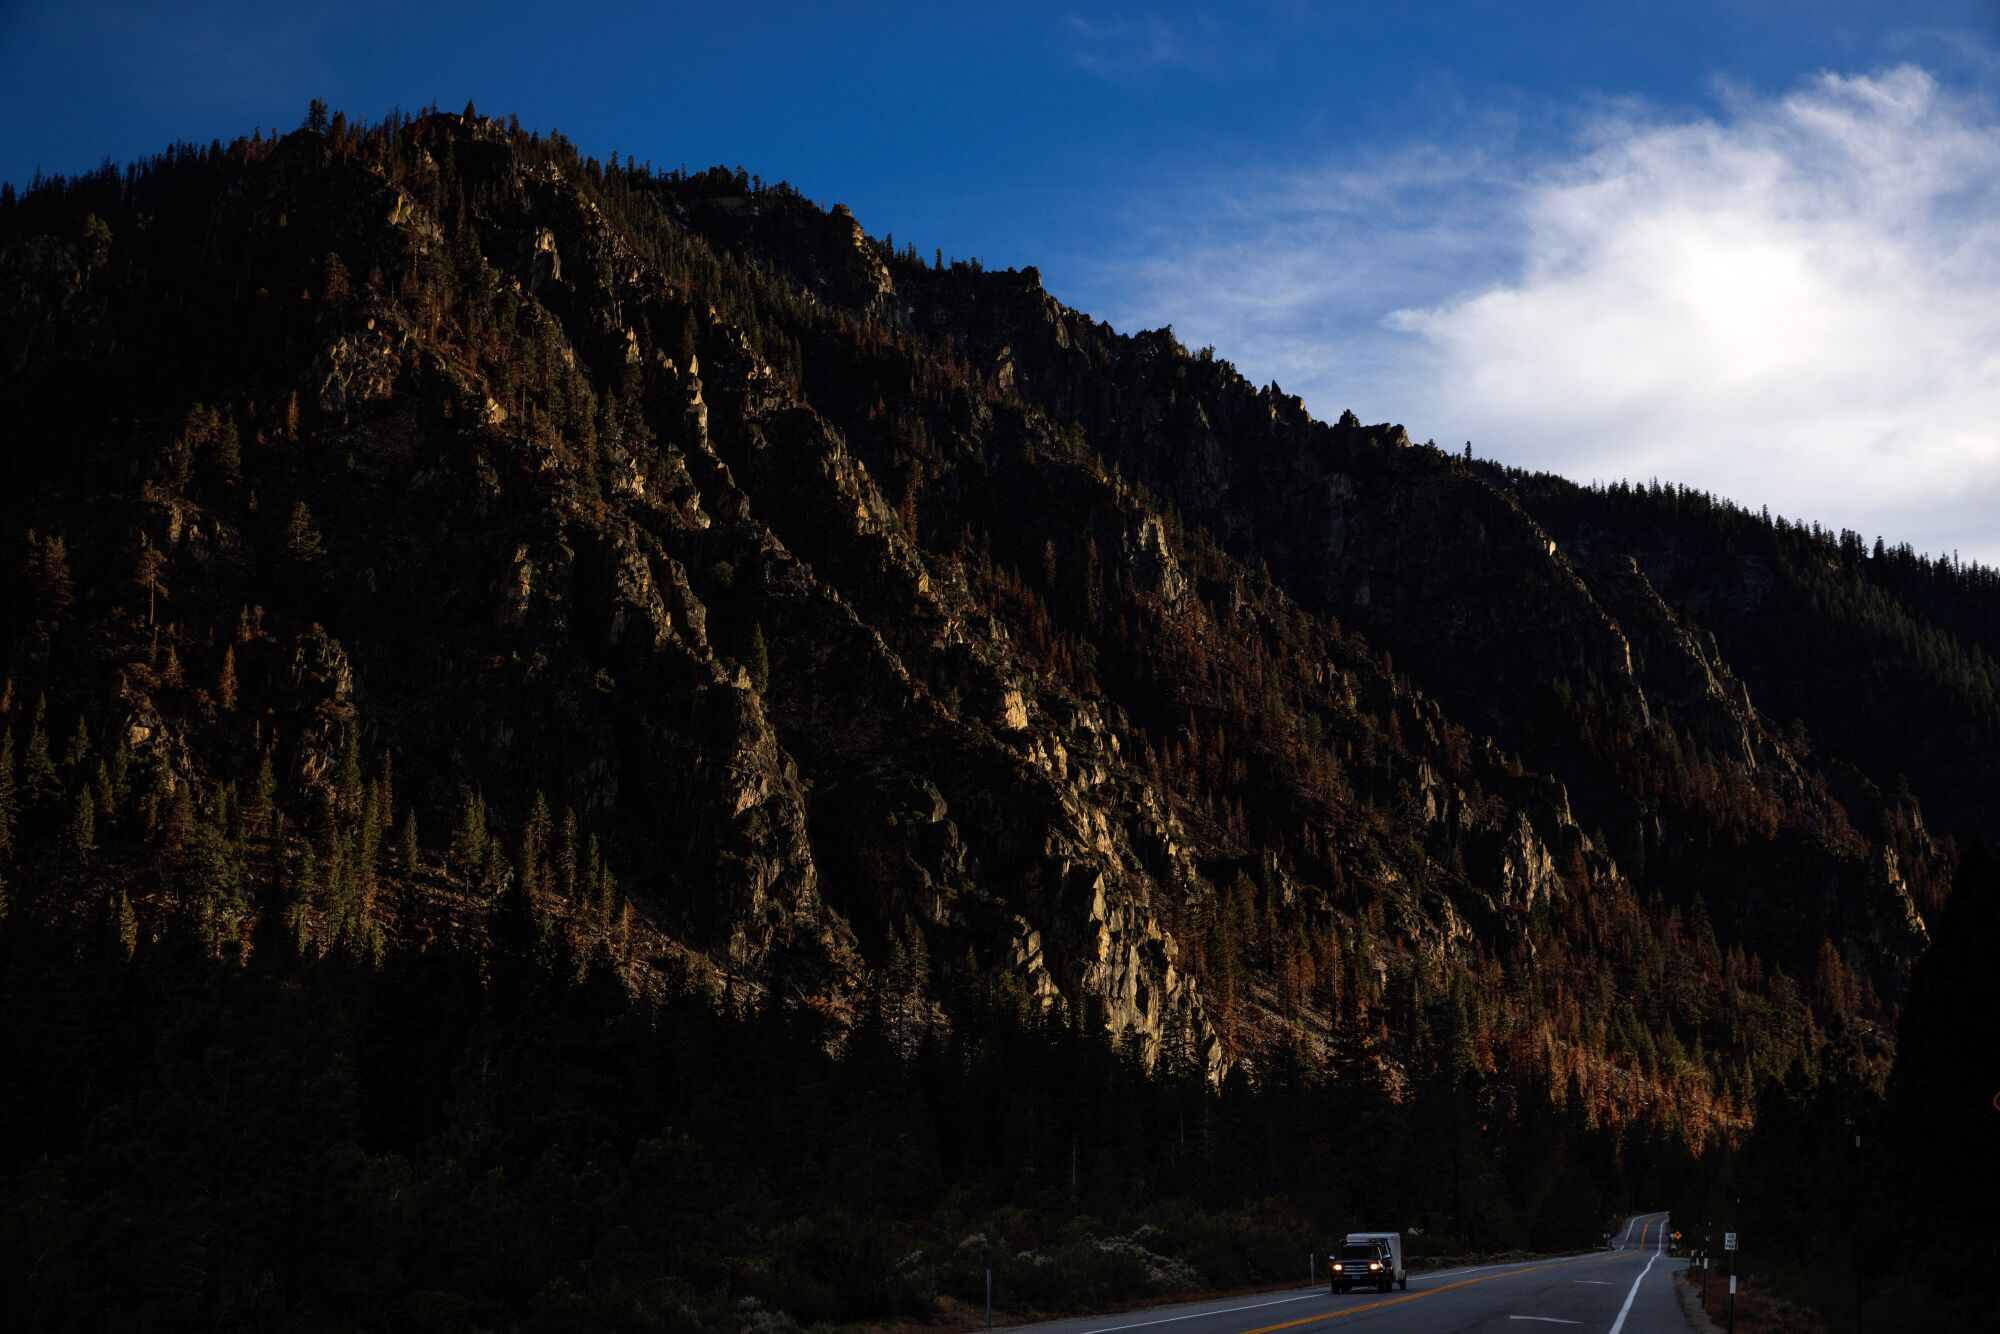 A lone vehicle traveling a highway alongside rocky, mountainous terrain